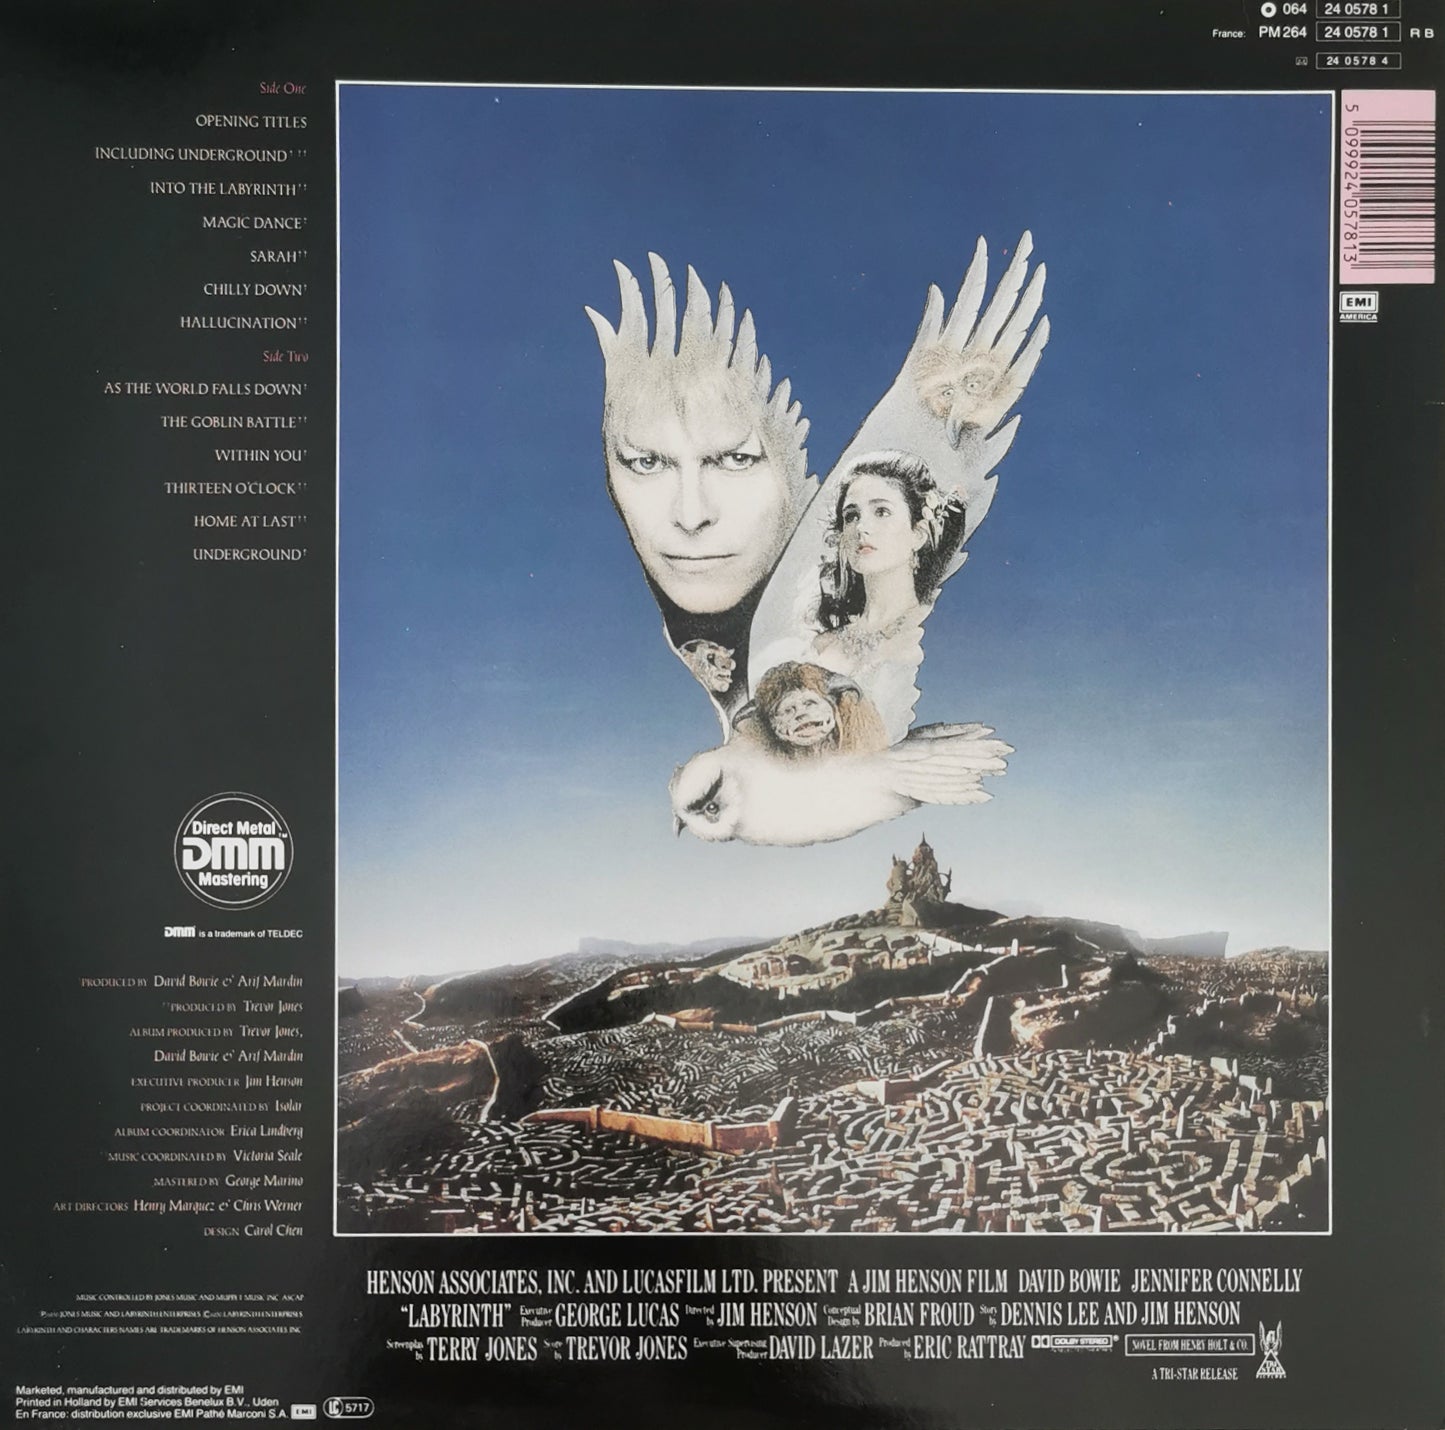 DAVID BOWIE / TREVOR JONES - Labyrinth (From The Original Soundtrack Of The Jim Henson Film)